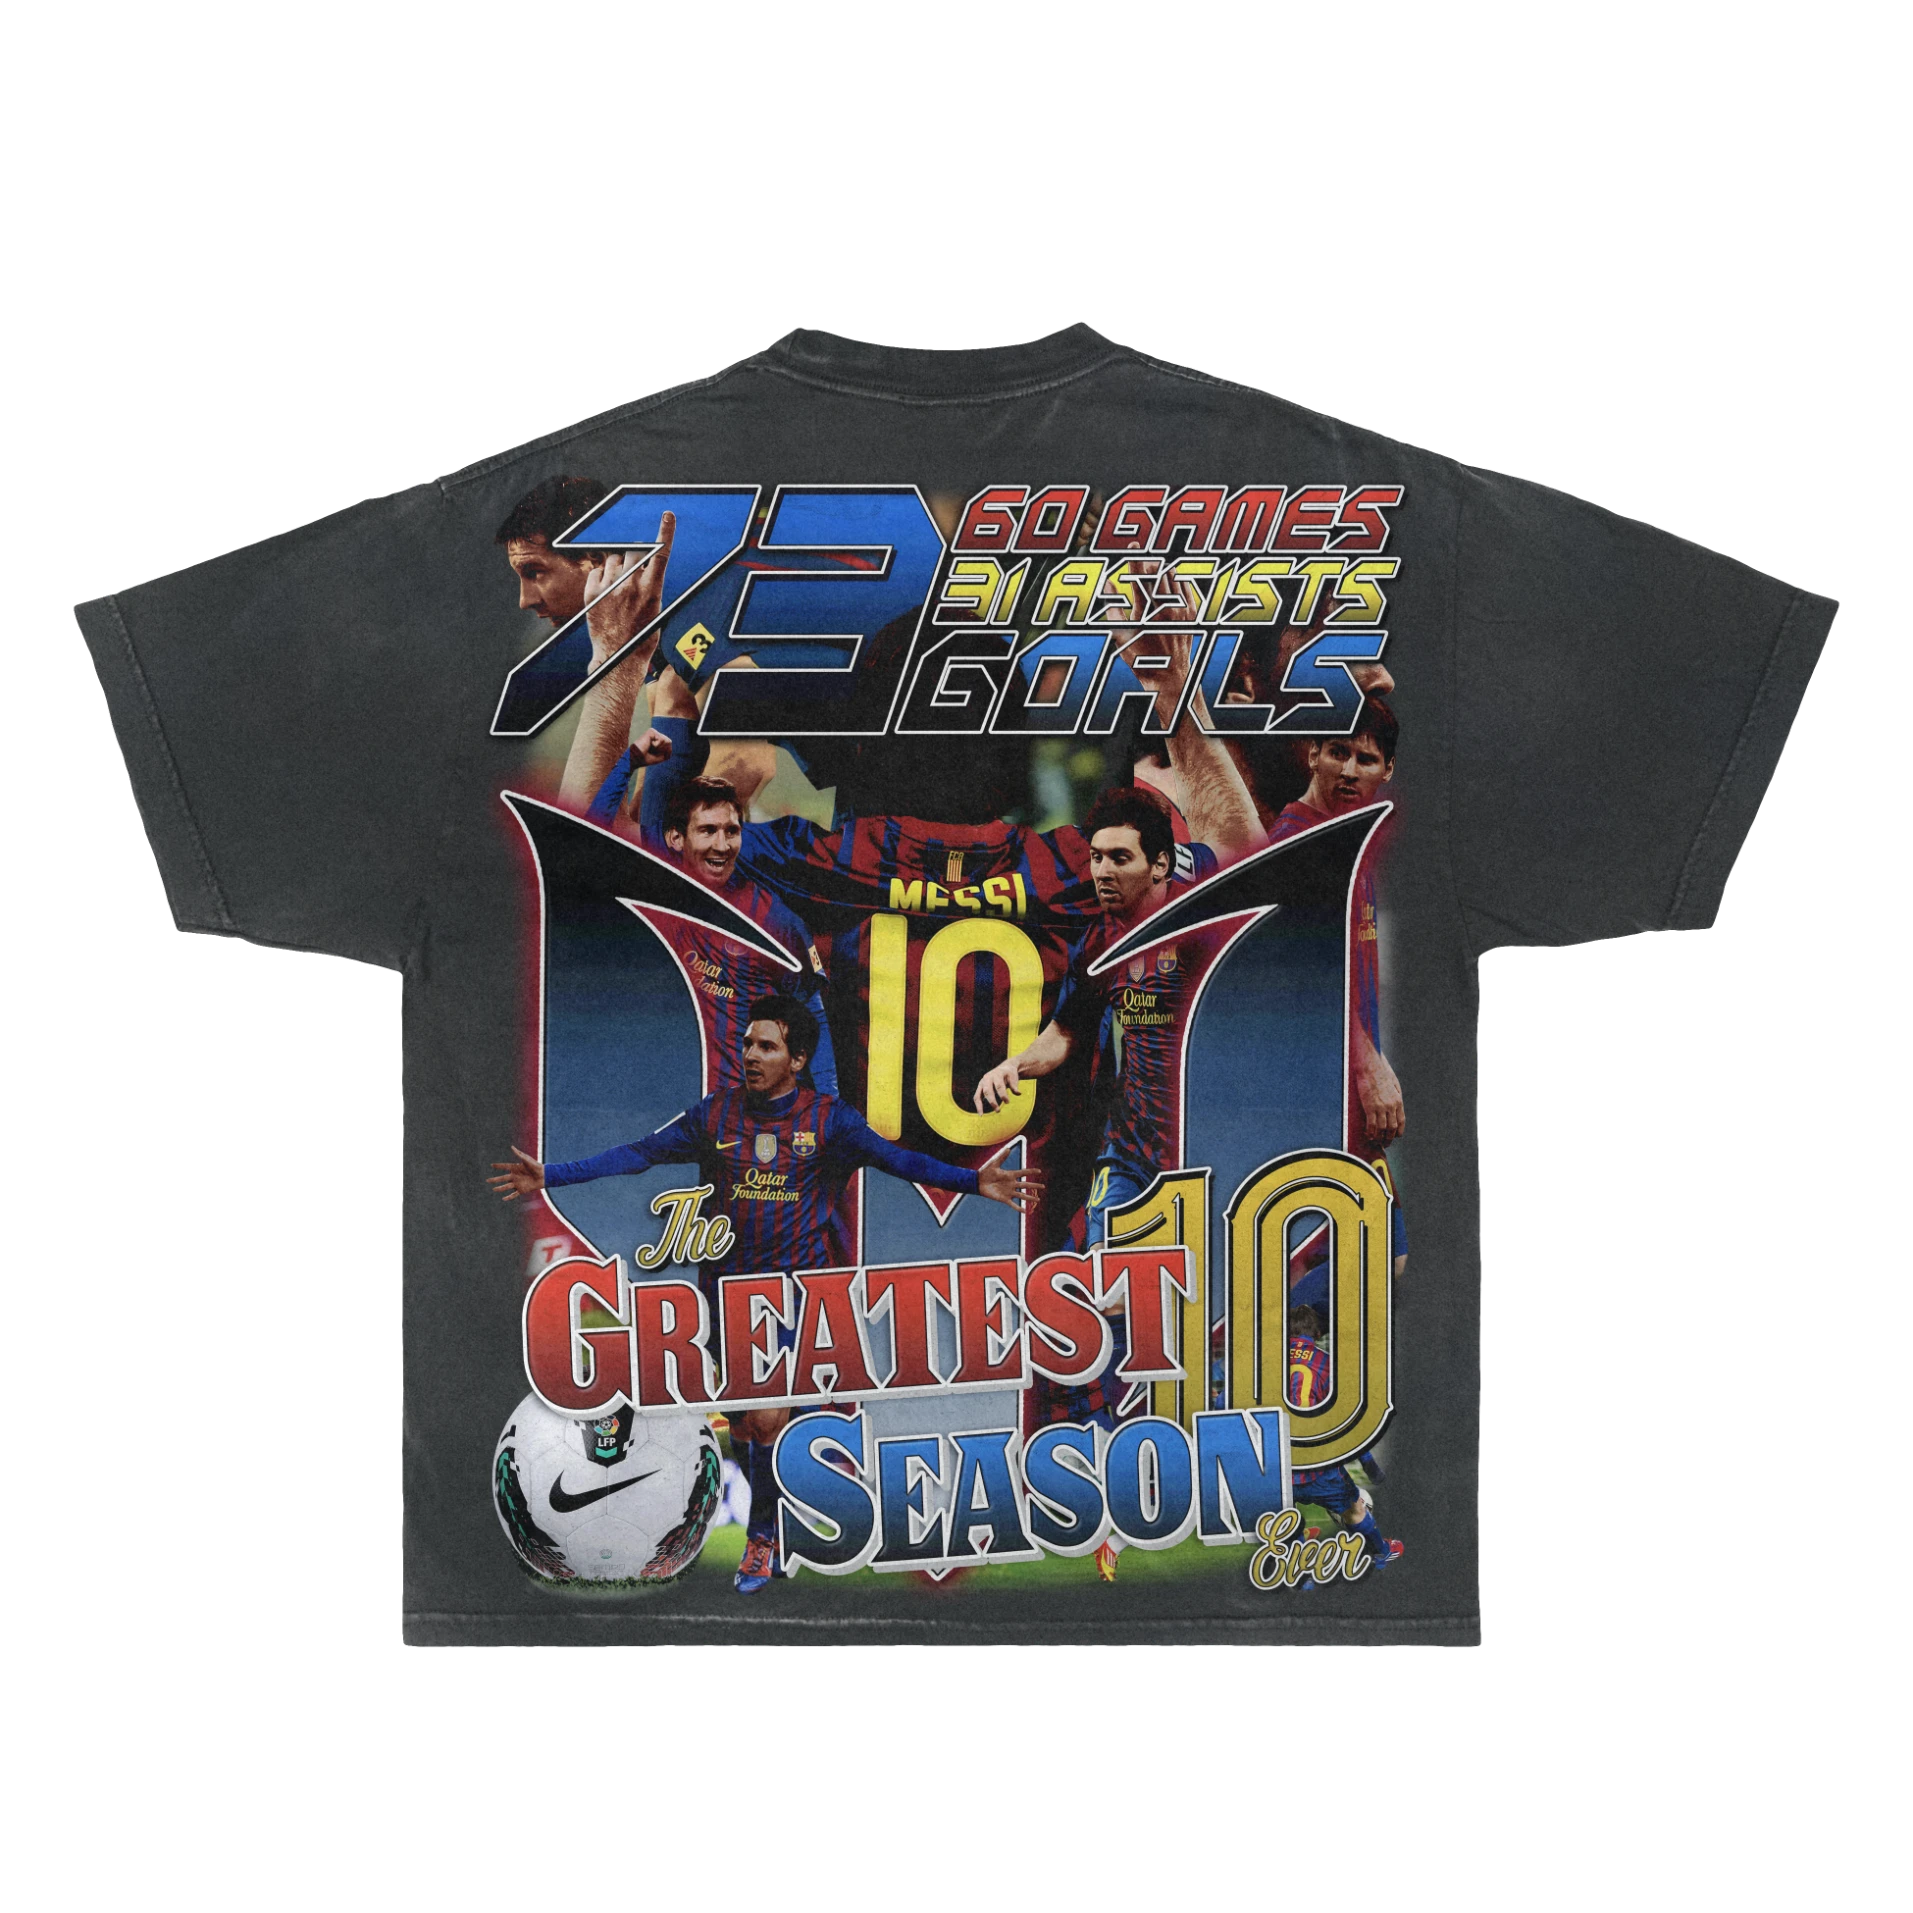 Lionel Messi '11-12 Tee Tee Greazy Tees 